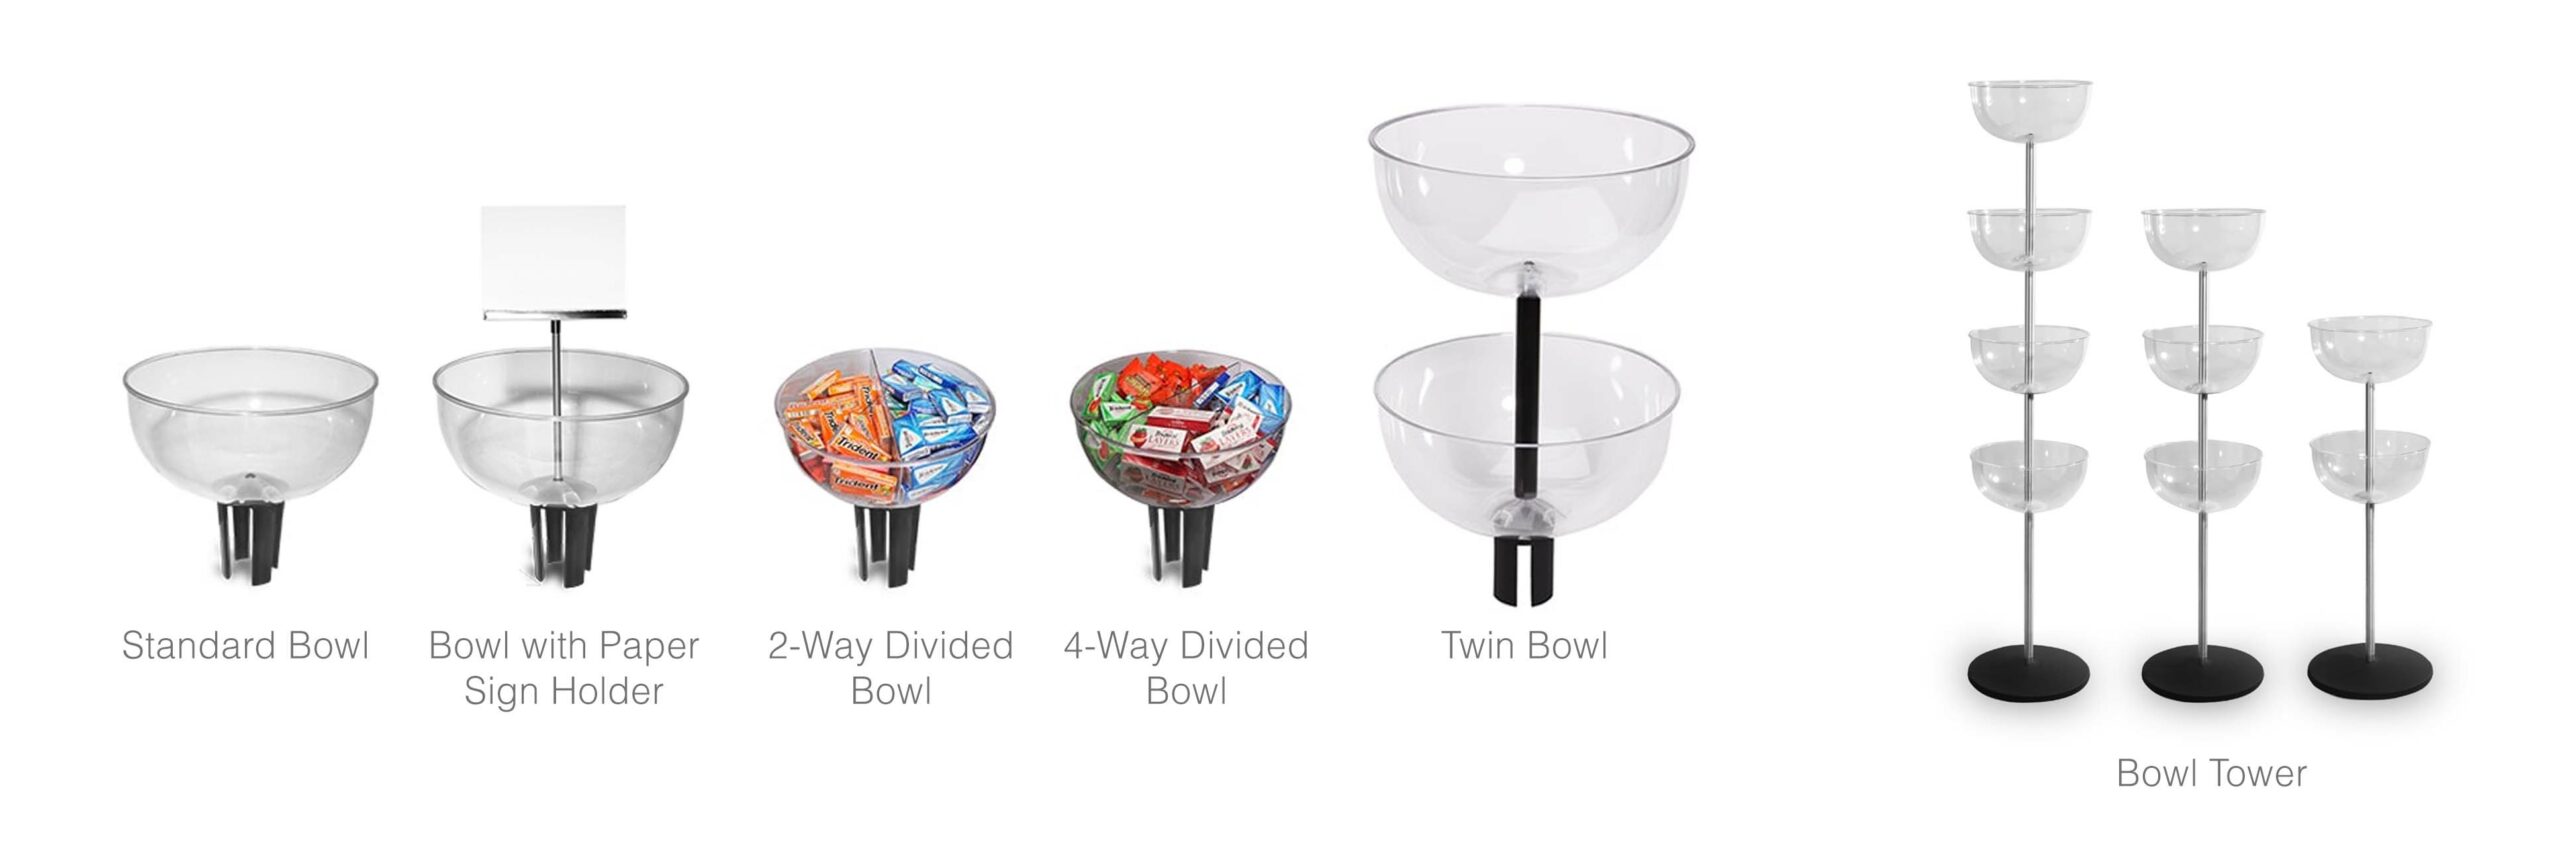 Merchandising Display Bowls